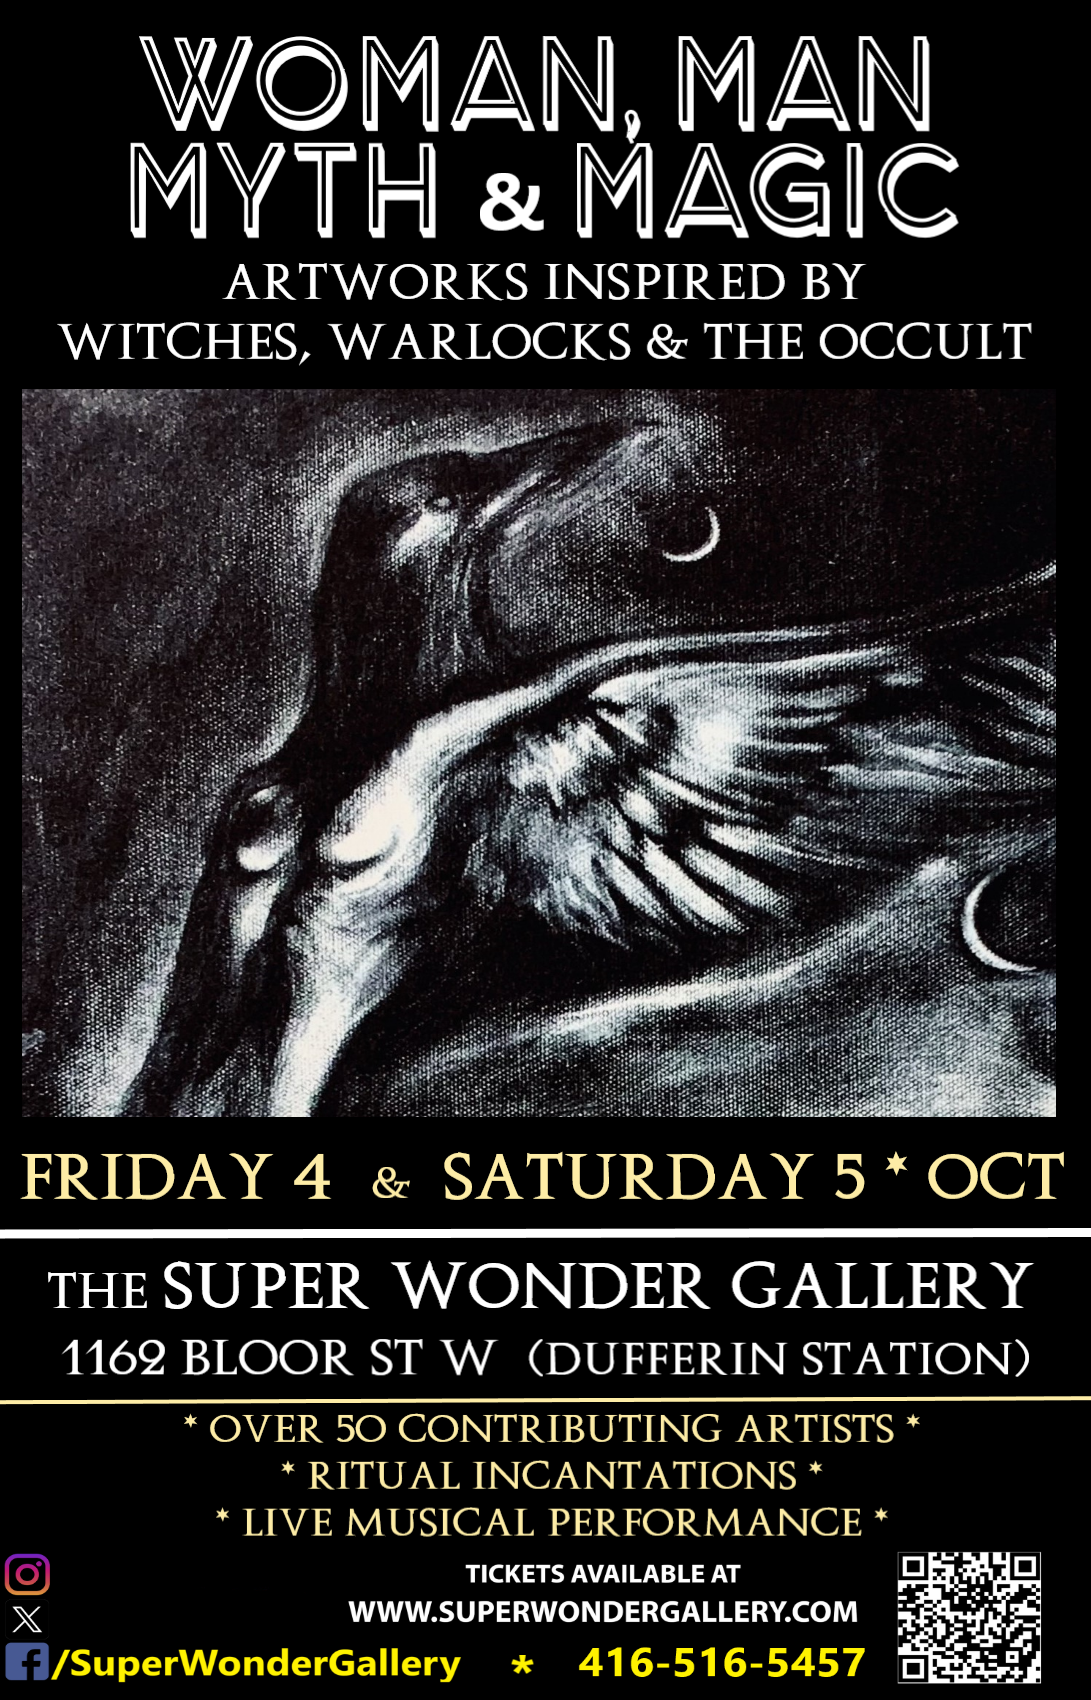 WOMAN, MAN, MYTH & MAGIC ART EXHIBITION & SATURDAY PERFORMANCE on Oct 05, 20:00@SUPER WONDER GALLERY - Buy tickets and Get information on Super Wonder Gallery 